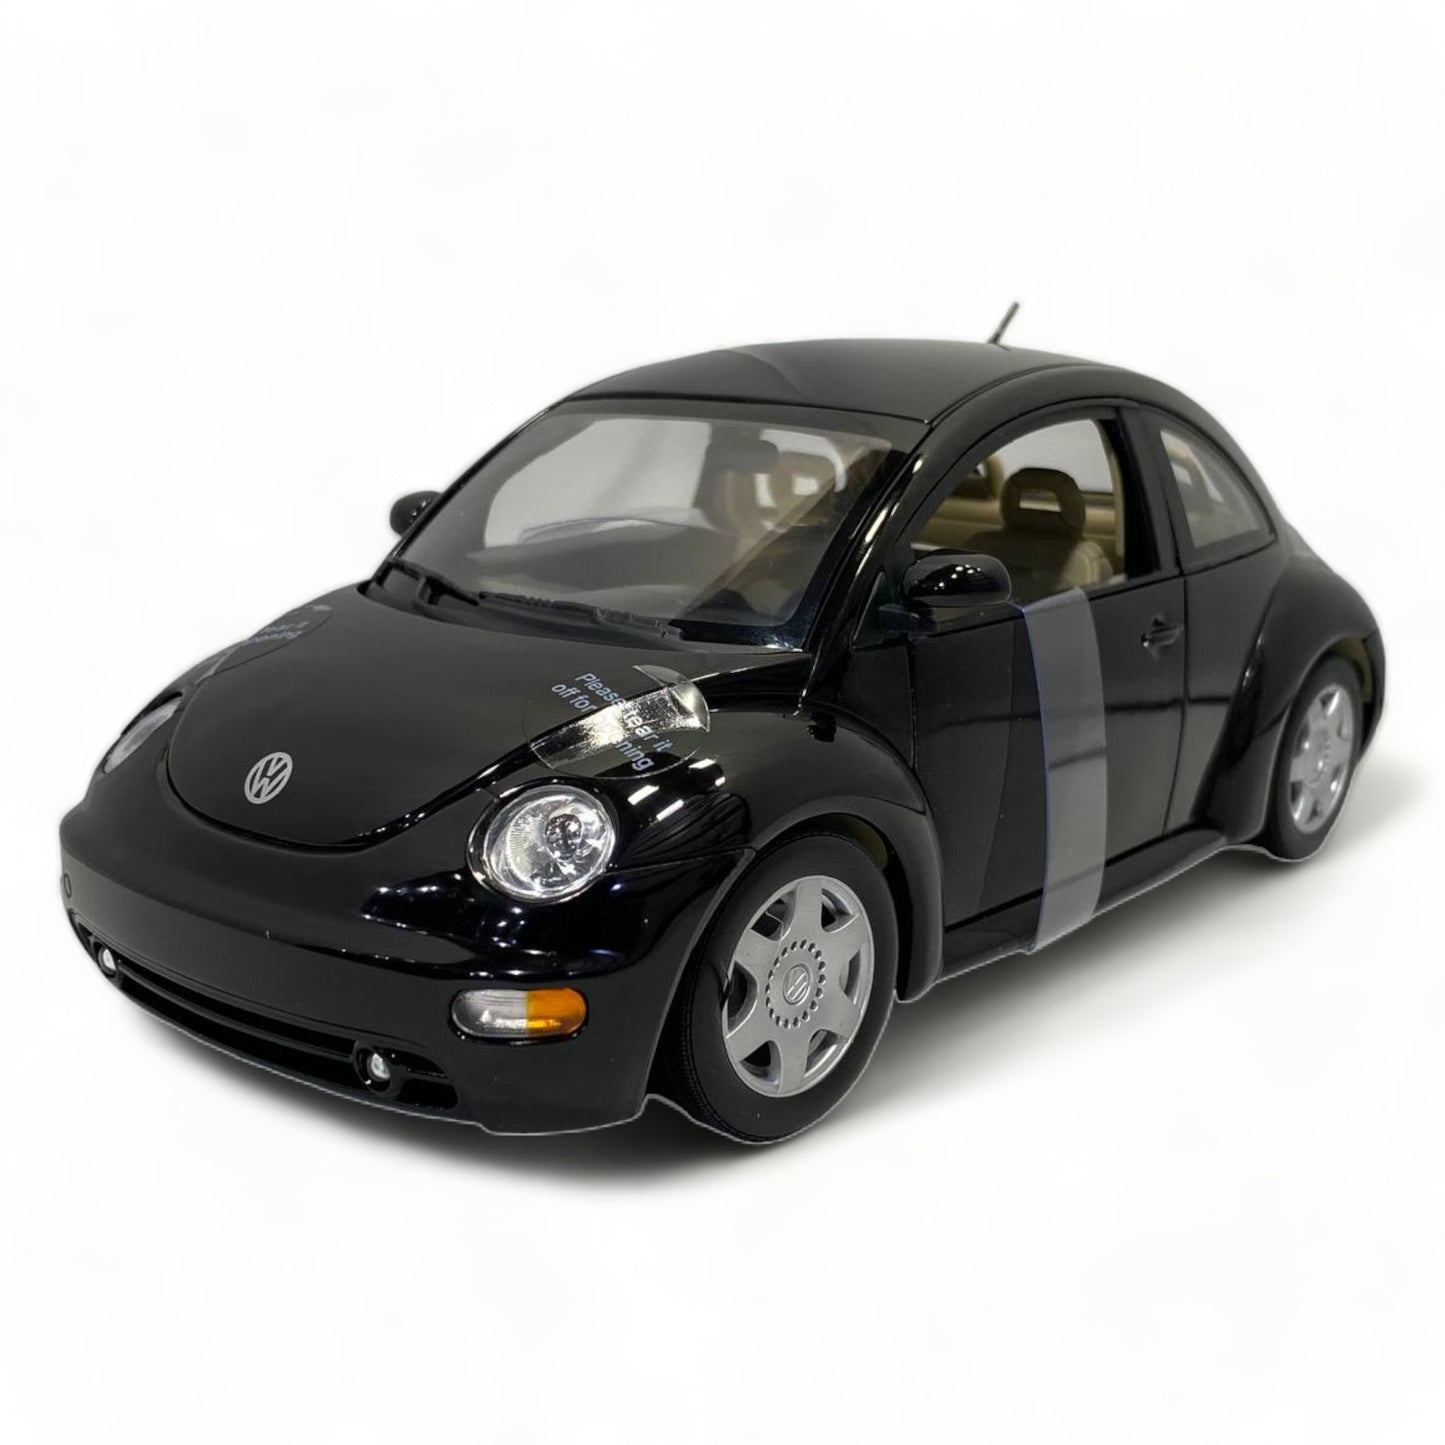 1/18 GATE G Volkswagen BEETLE COUPE BLACK Model Car|Sold in Dturman.com Dubai UAE.